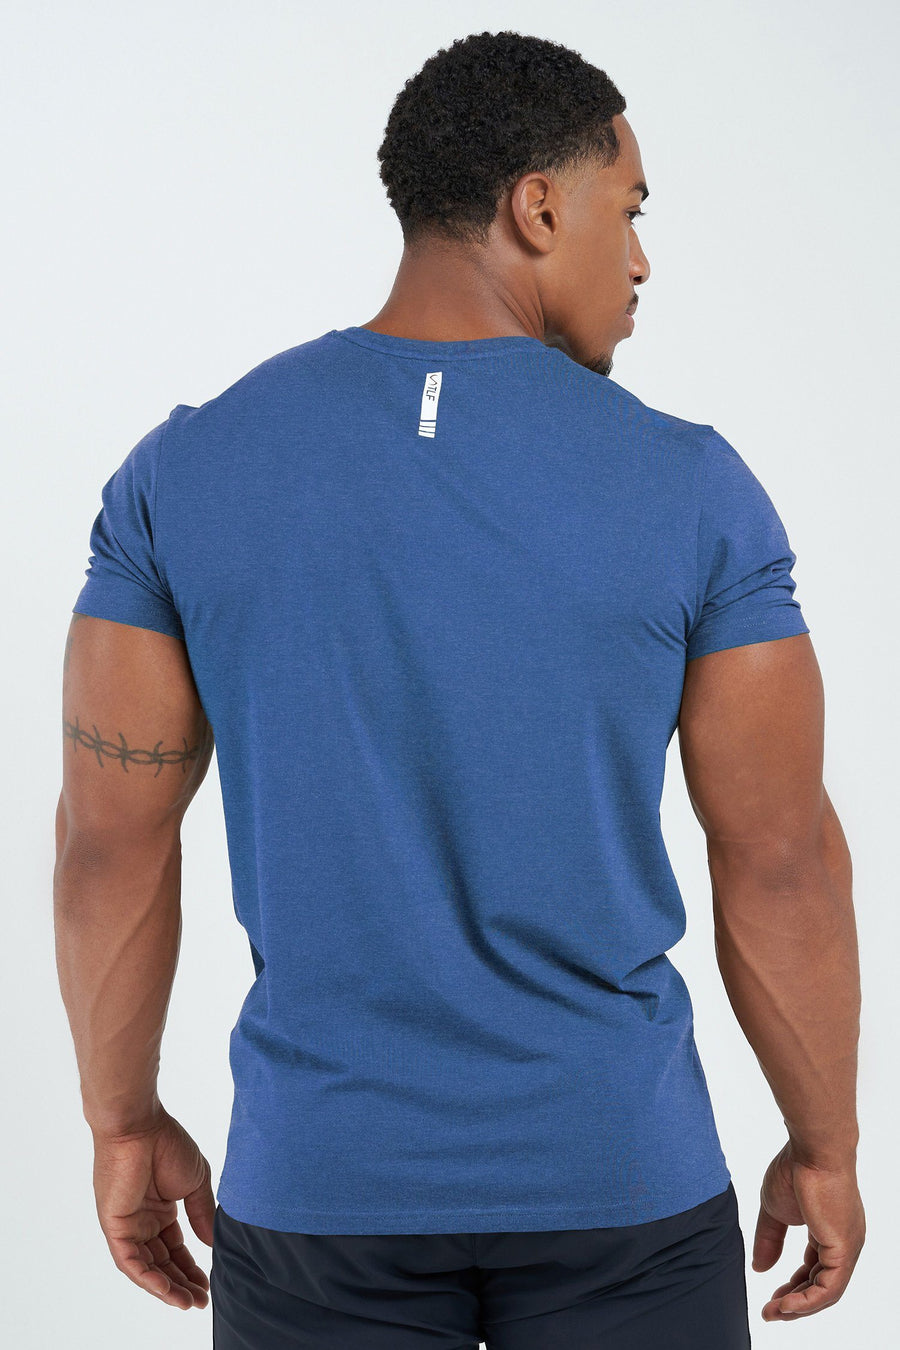 TLF Lift Gym T-Shirt - Cotton Stretch Gym Short Sleeve T Shirt - Blue 2